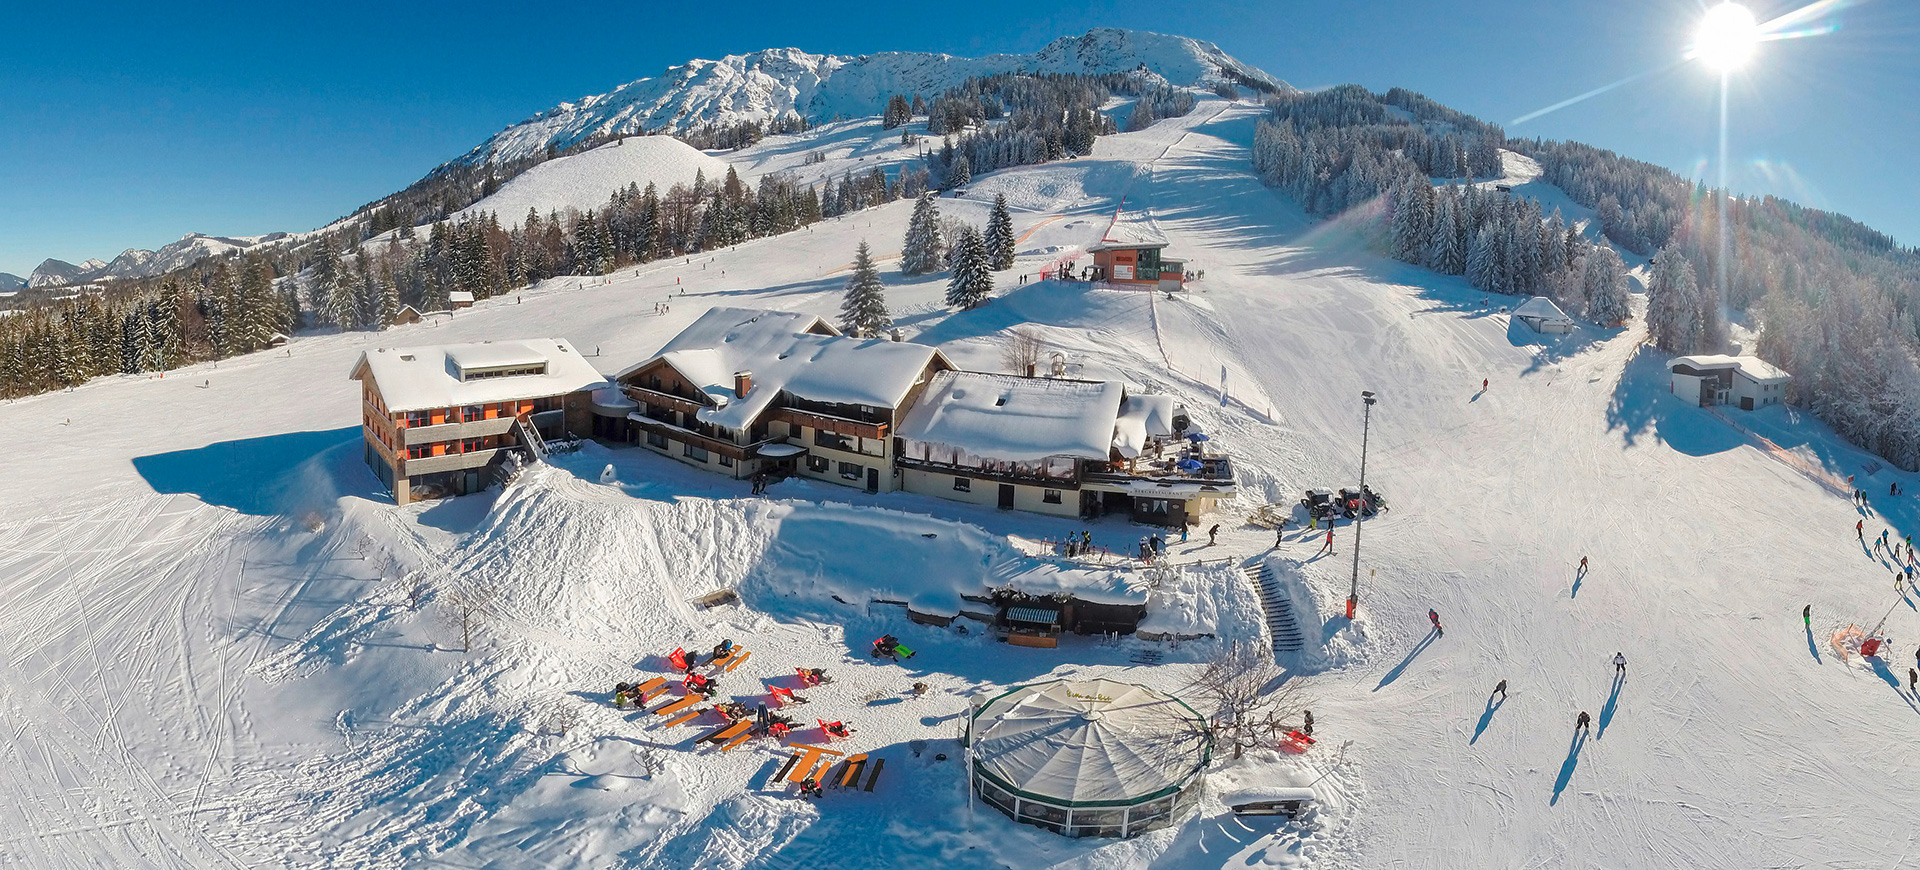 Biohotel Mattlihüs in the middle of a ski area